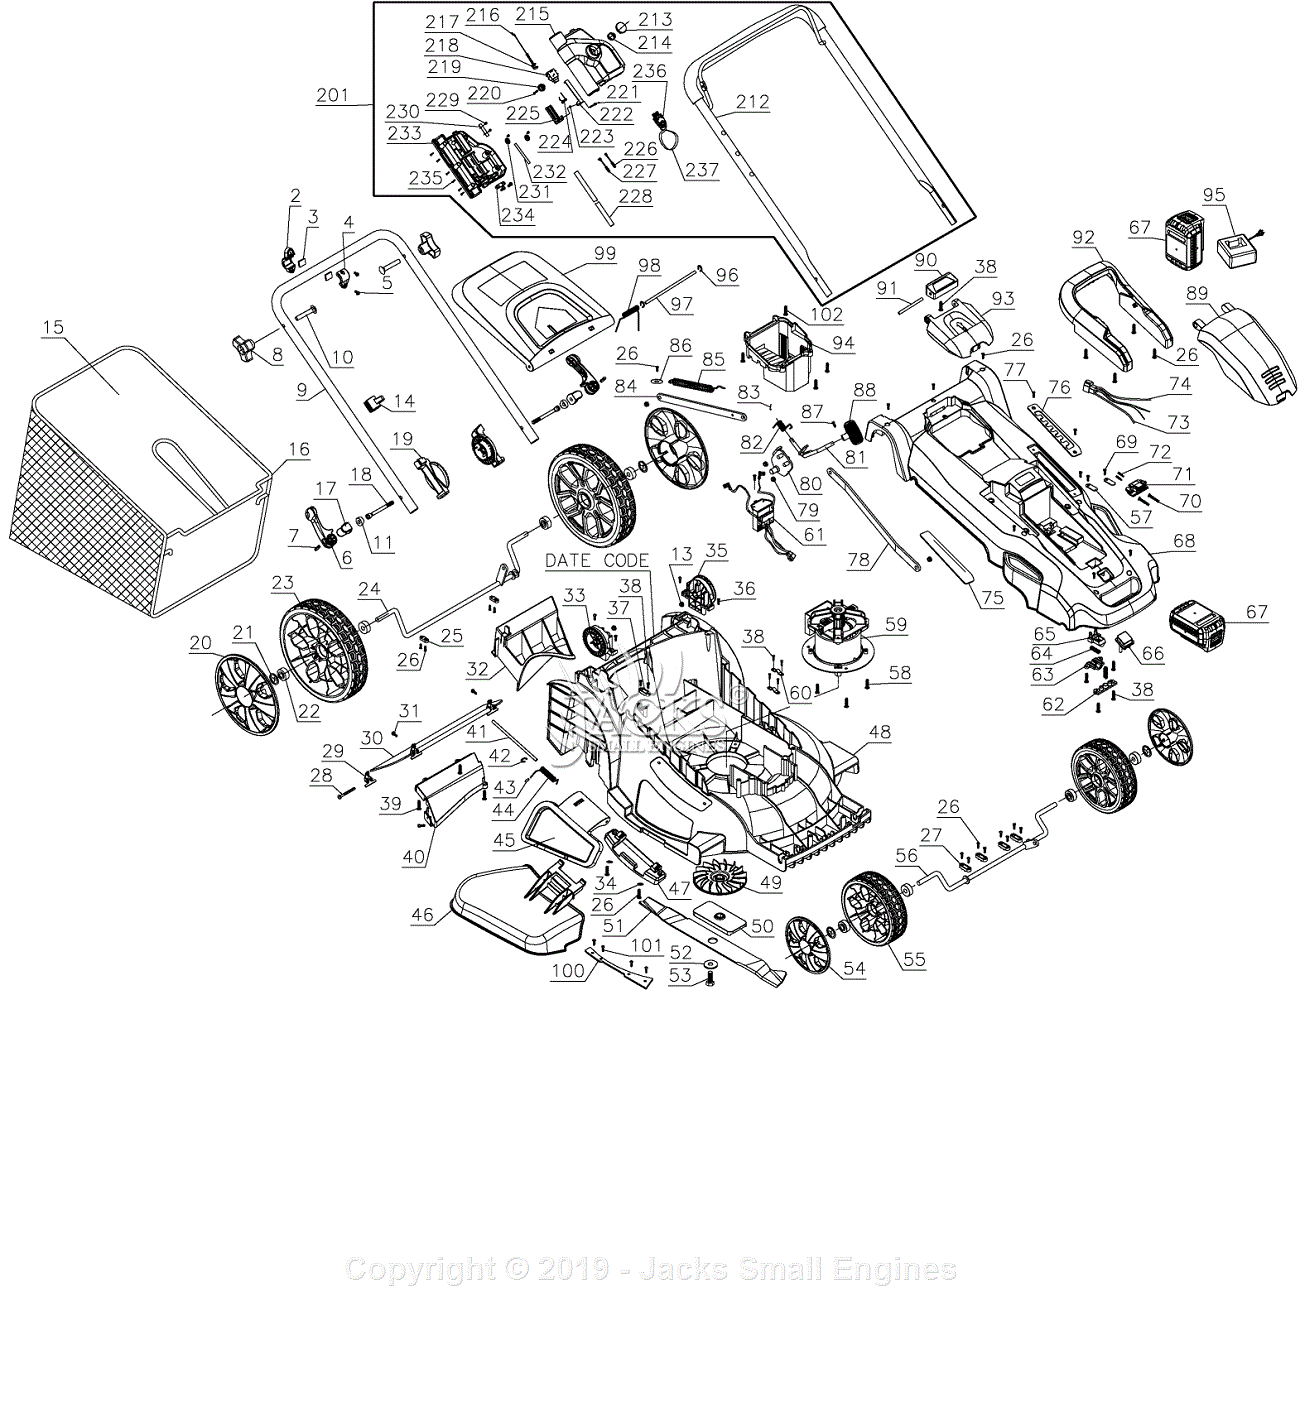 https://az417944.vo.msecnd.net/diagrams/manufacturer/black-decker/lawn-mower/cm2045/mower/diagram_1.gif